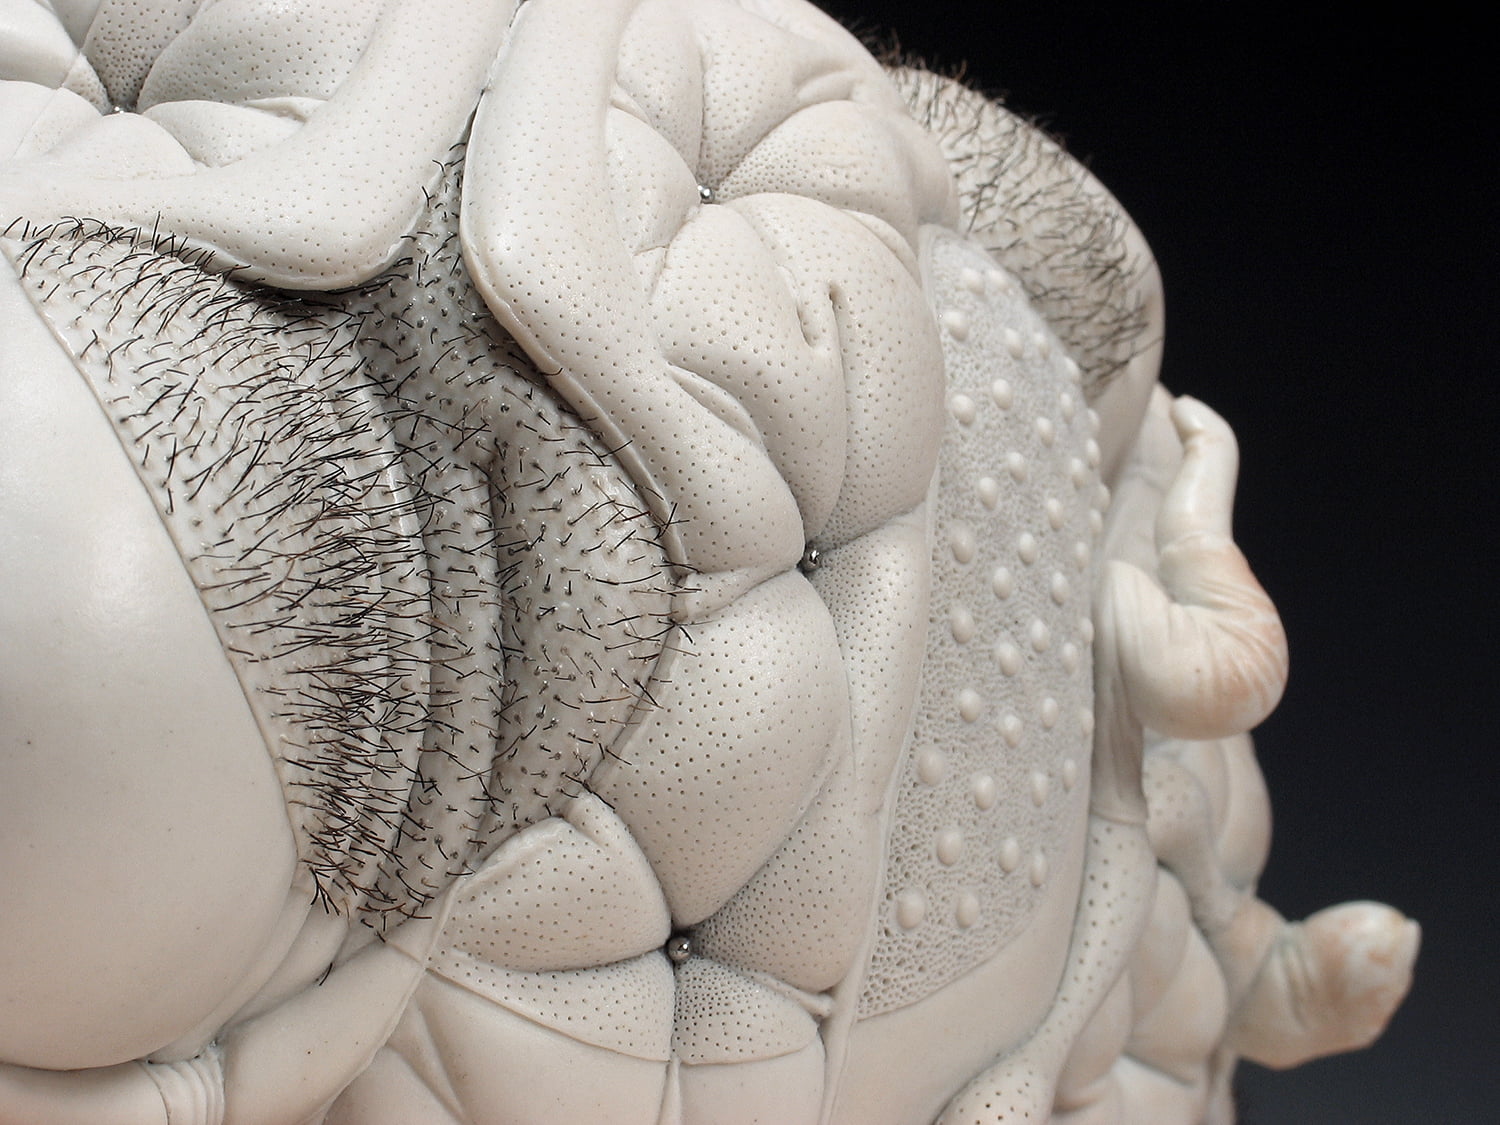 Jason Briggs "Venus" (detail 2). Porcelain, hair, and mixed media sculptural ceramic art.